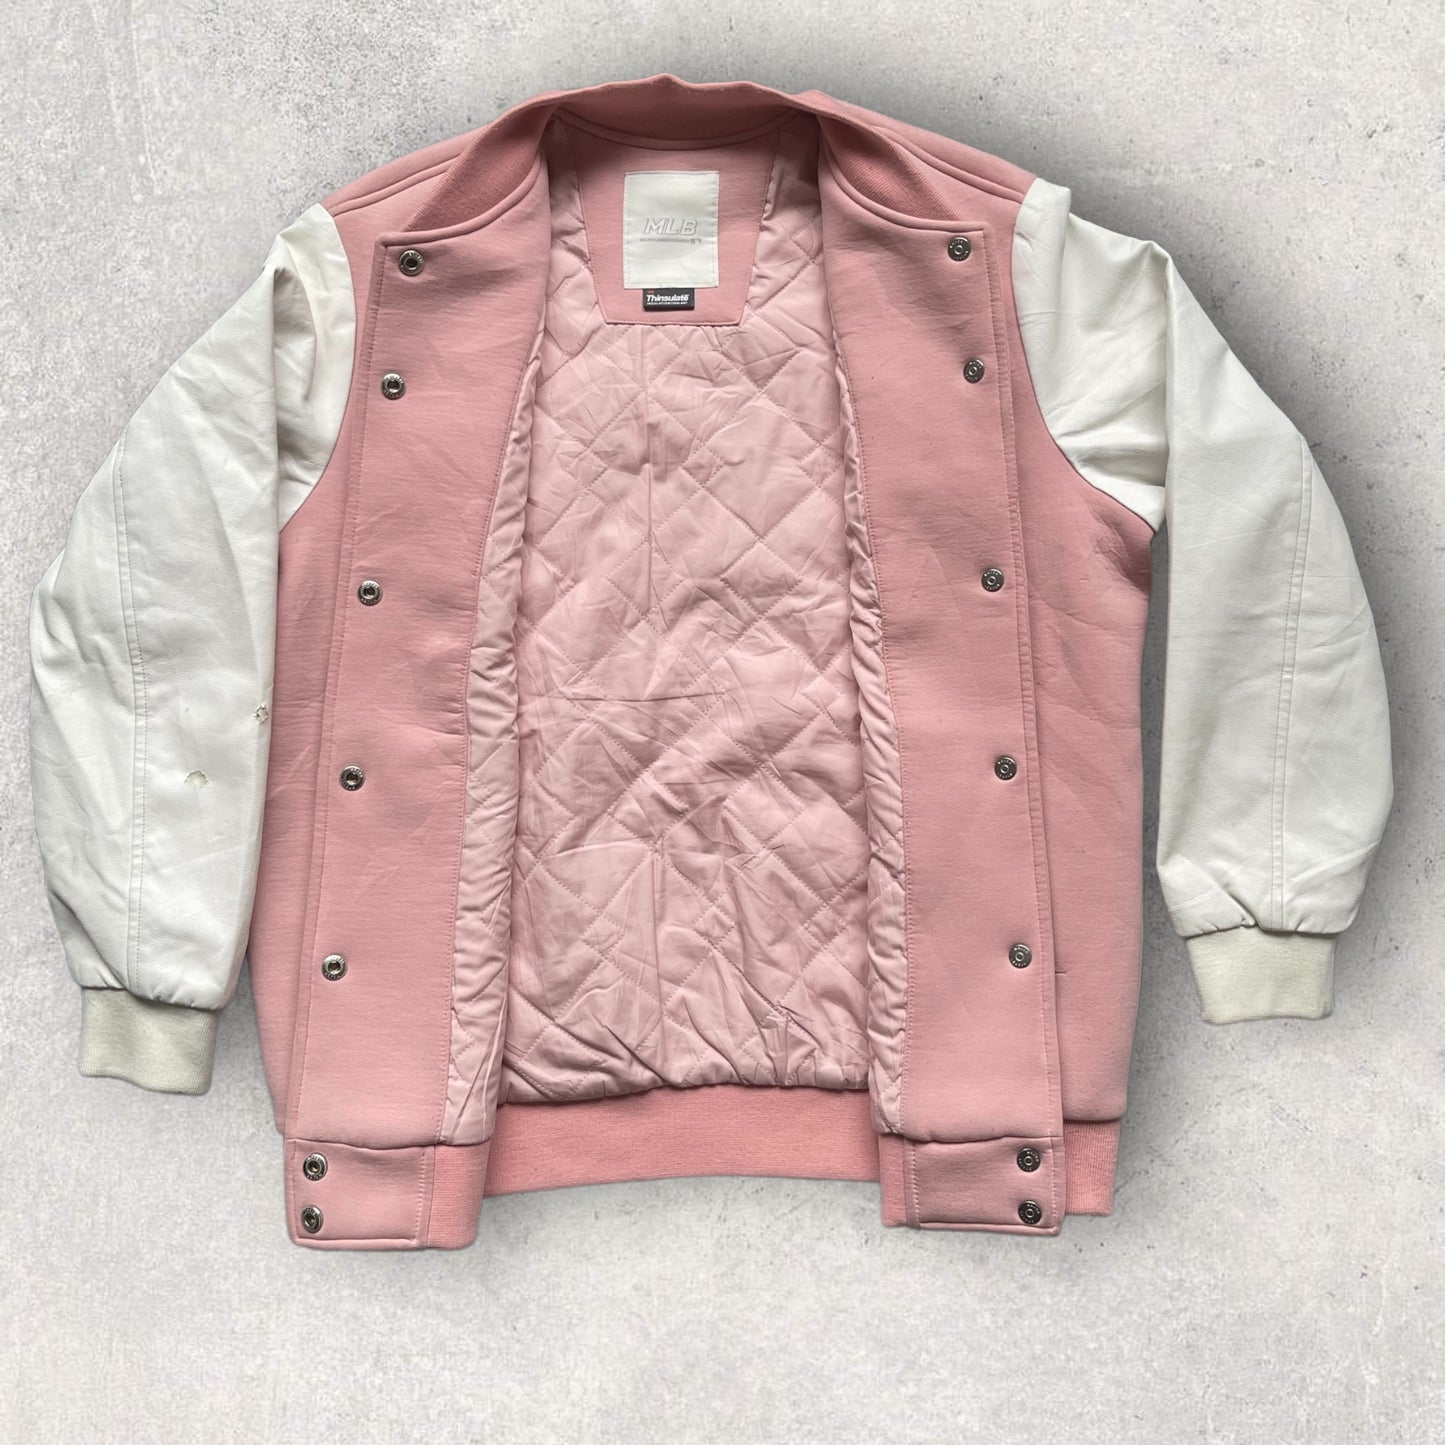 Yankees Varsity Jacket Vintage Pink College Size M J_1